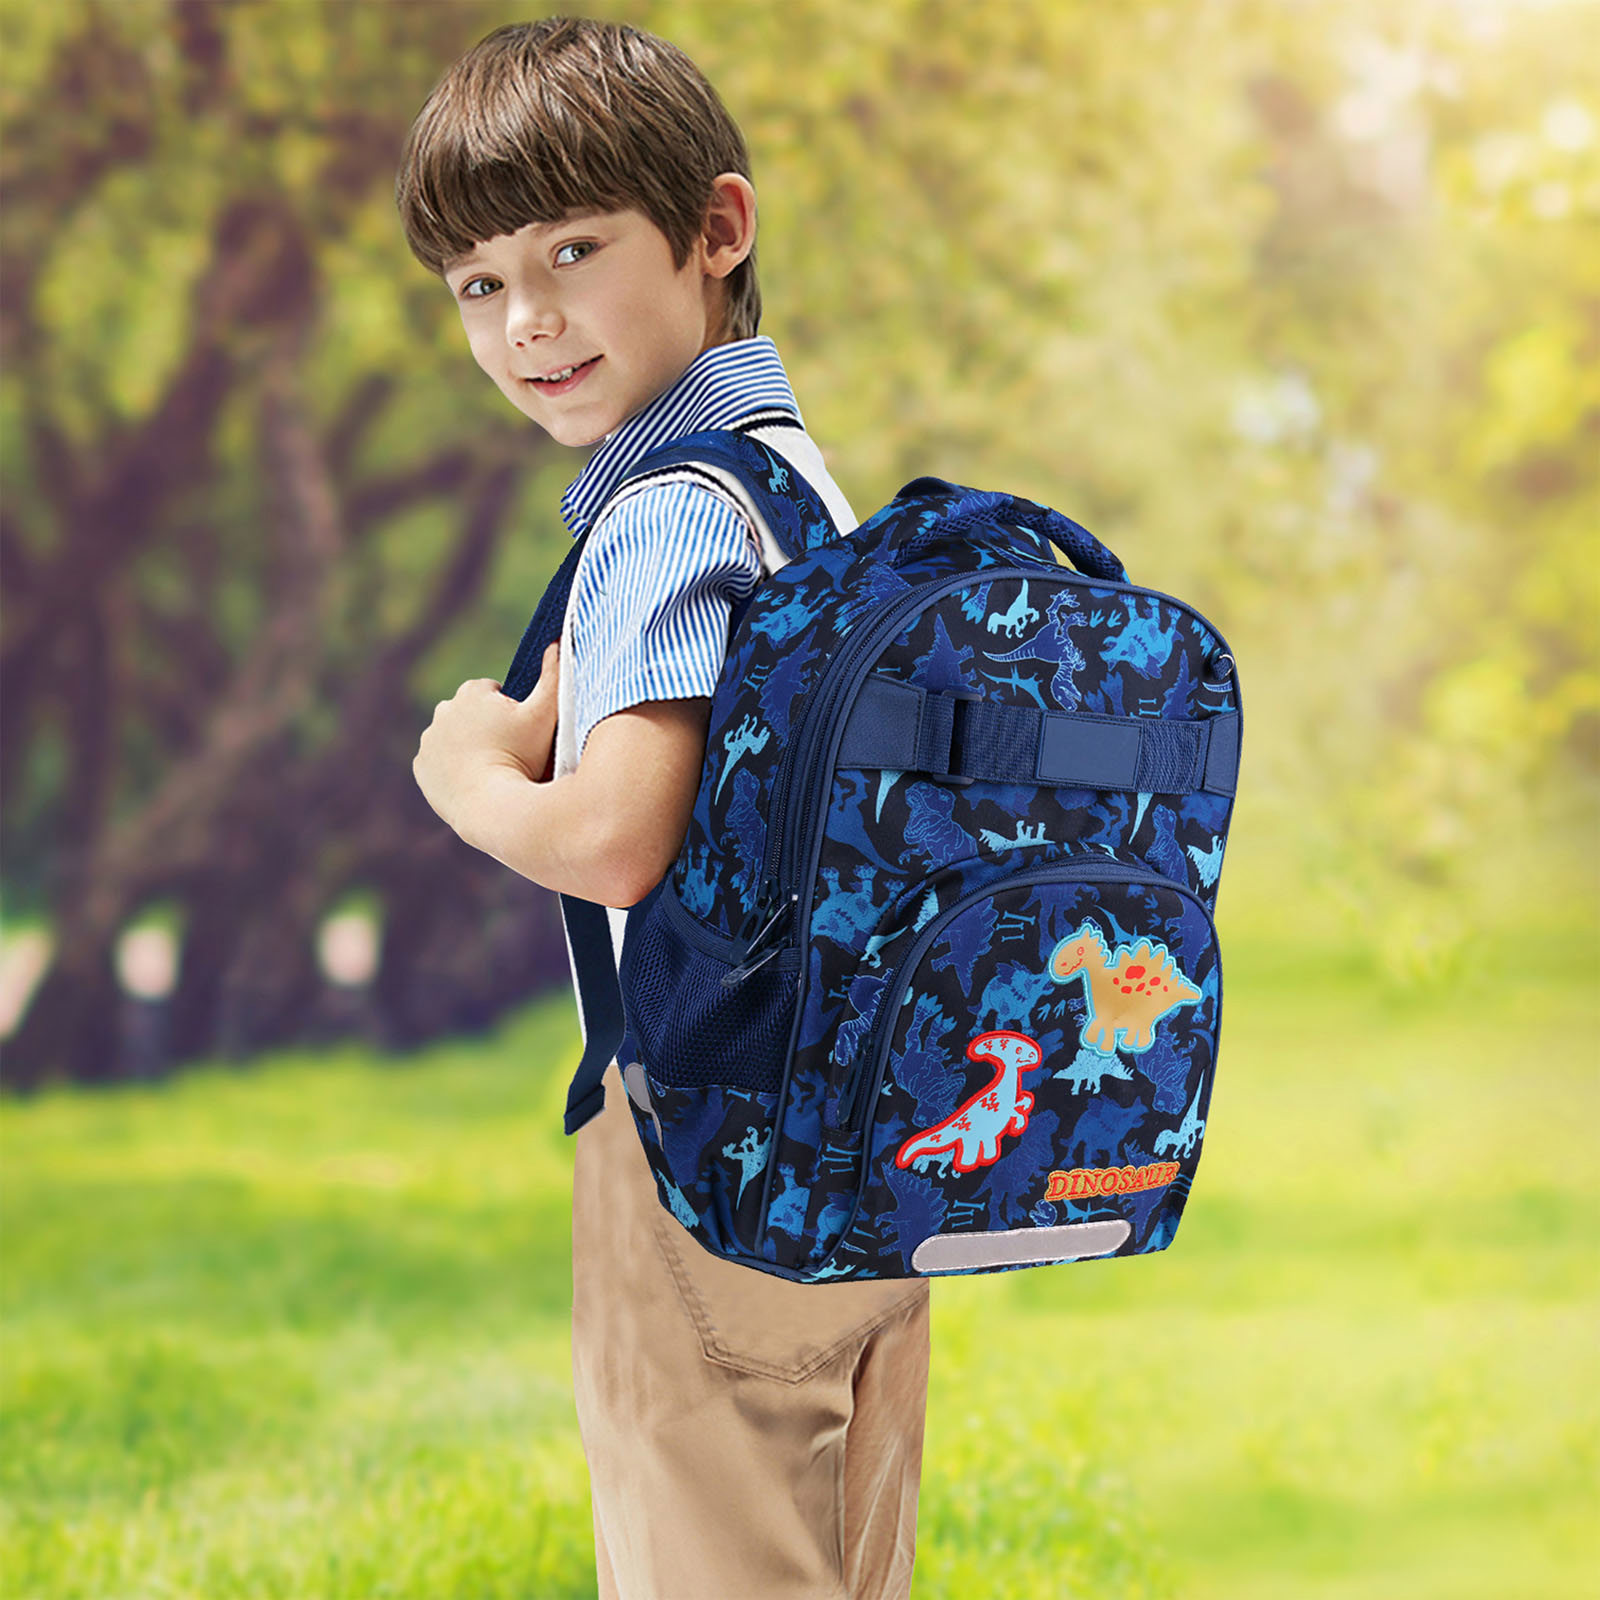 lvyH Kids School Backpack Unicorn Dinosaur Waterproof Schoolbag with Pencil Case Boys Girls Travel Outdoor,Blue - image 5 of 8